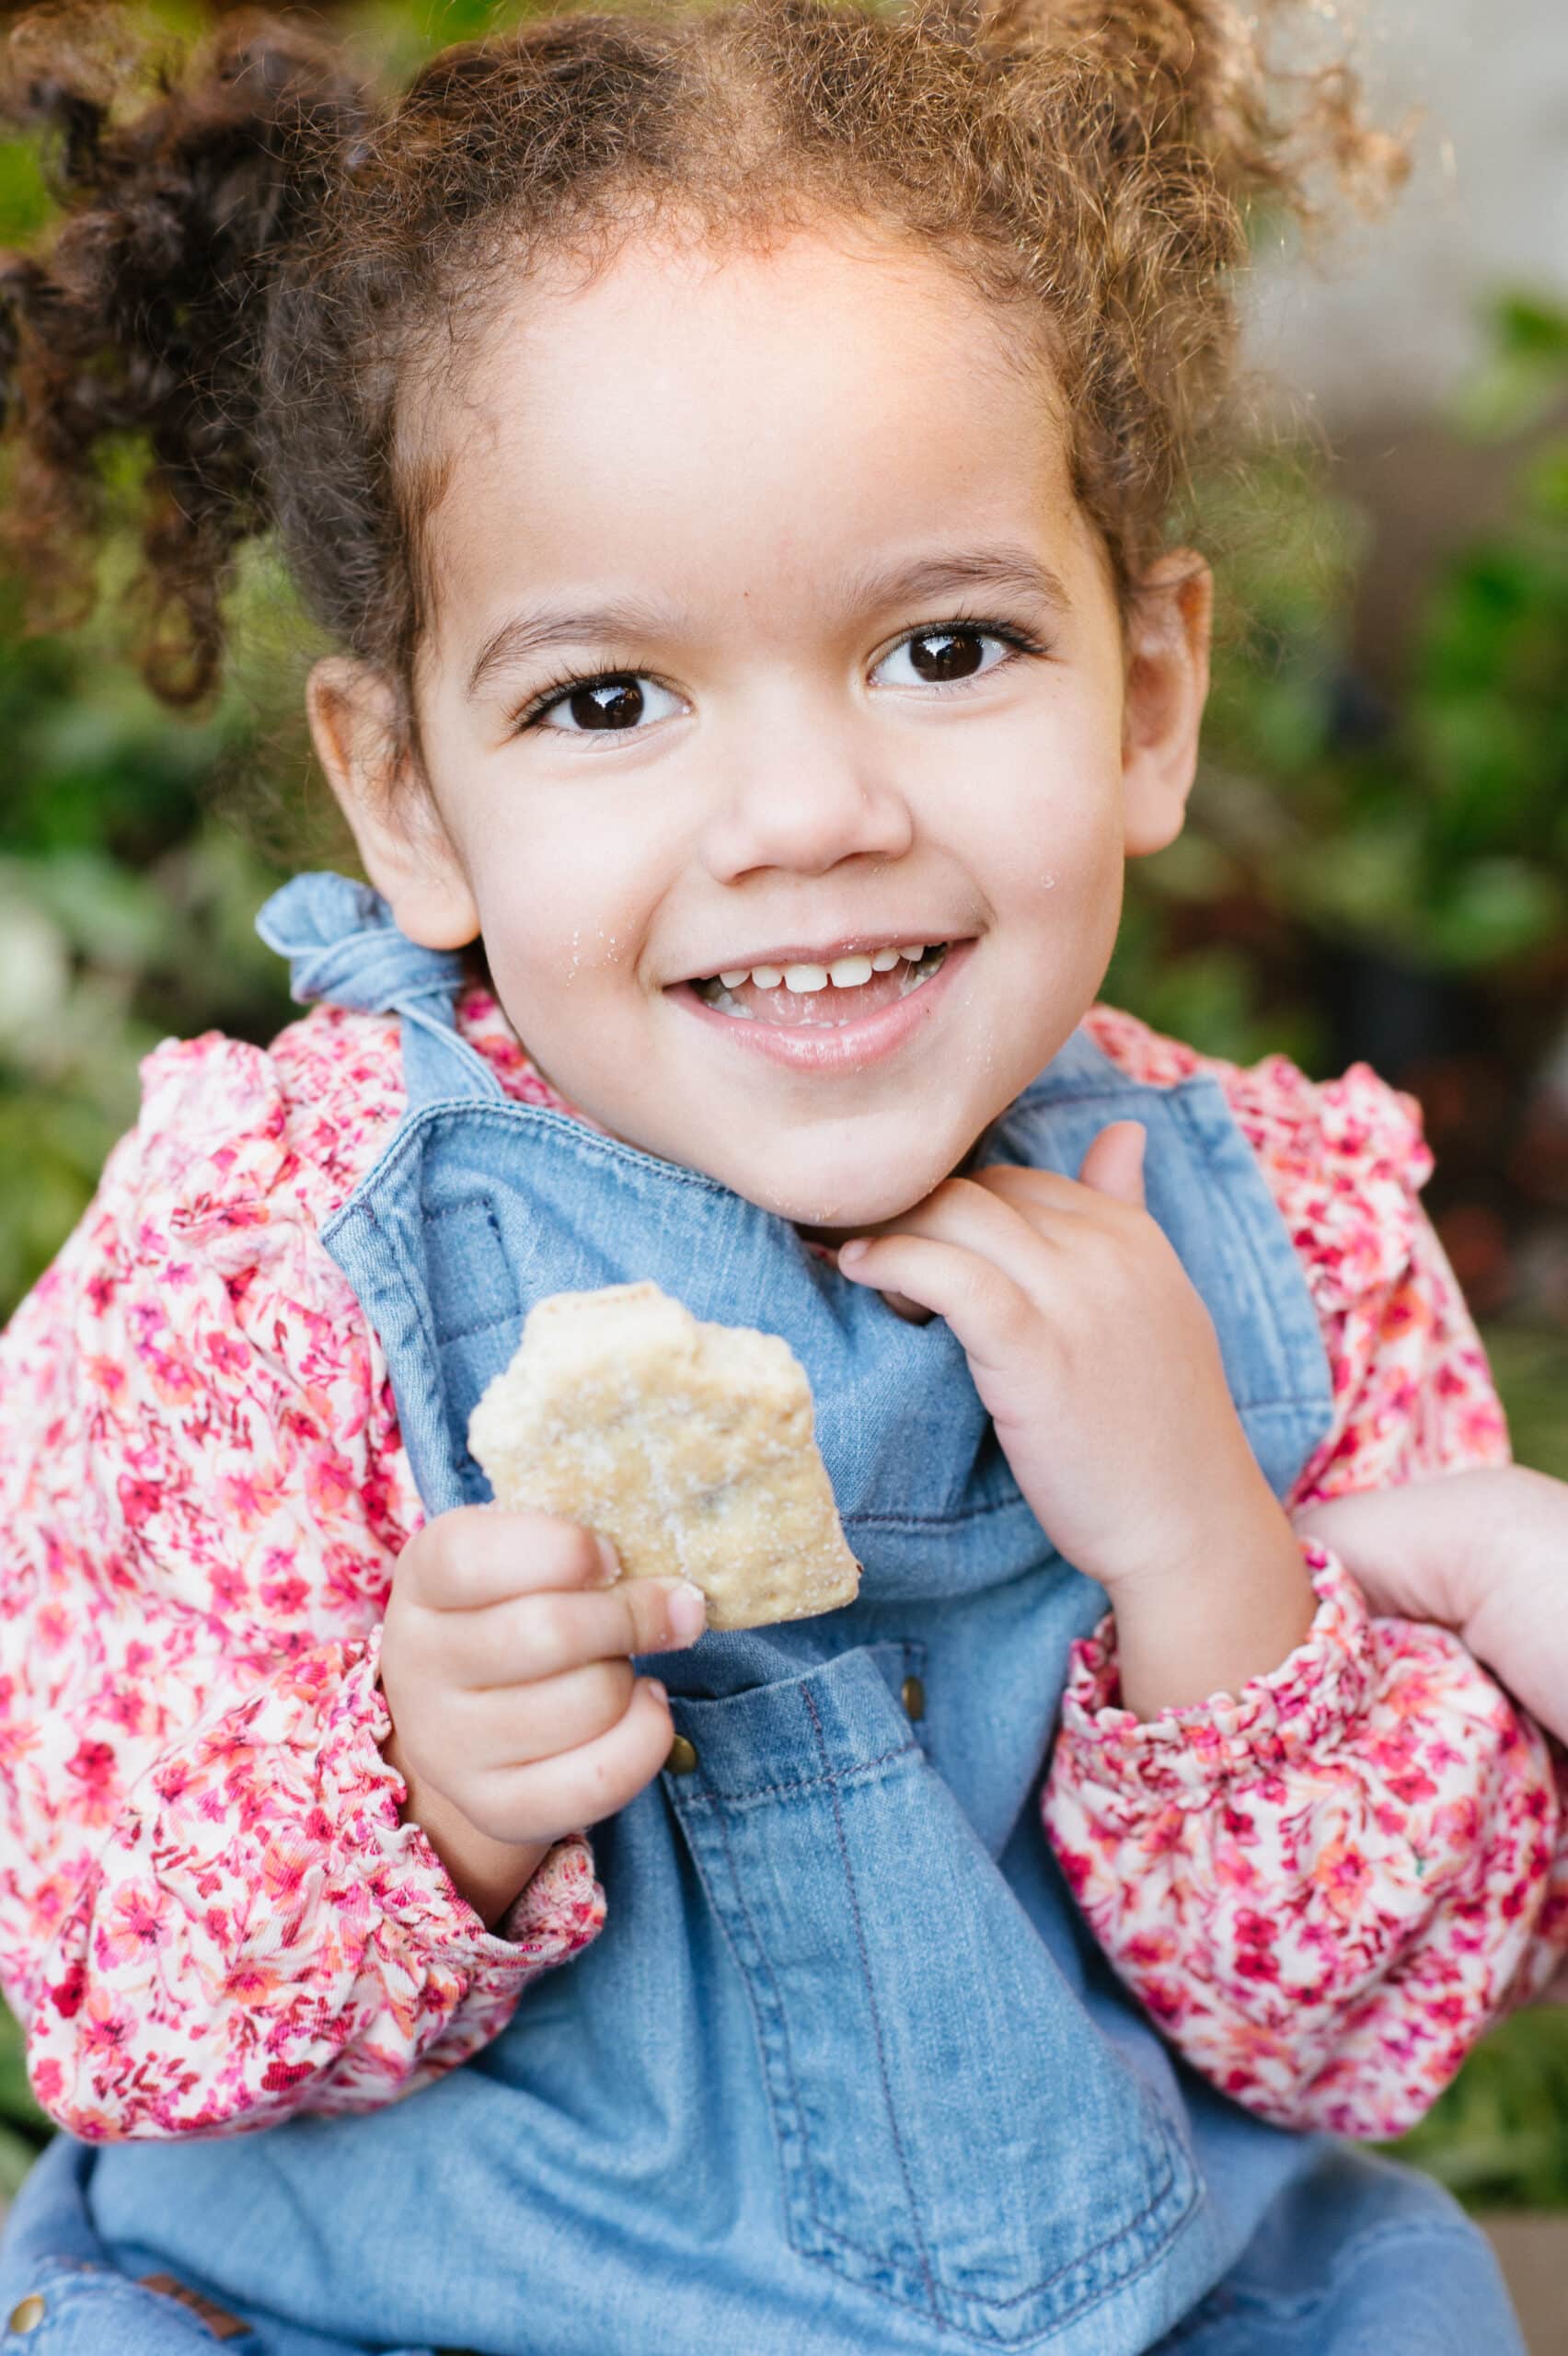 Toddler girl enjoying a snack of Allen's Scottish Shortbread cookies